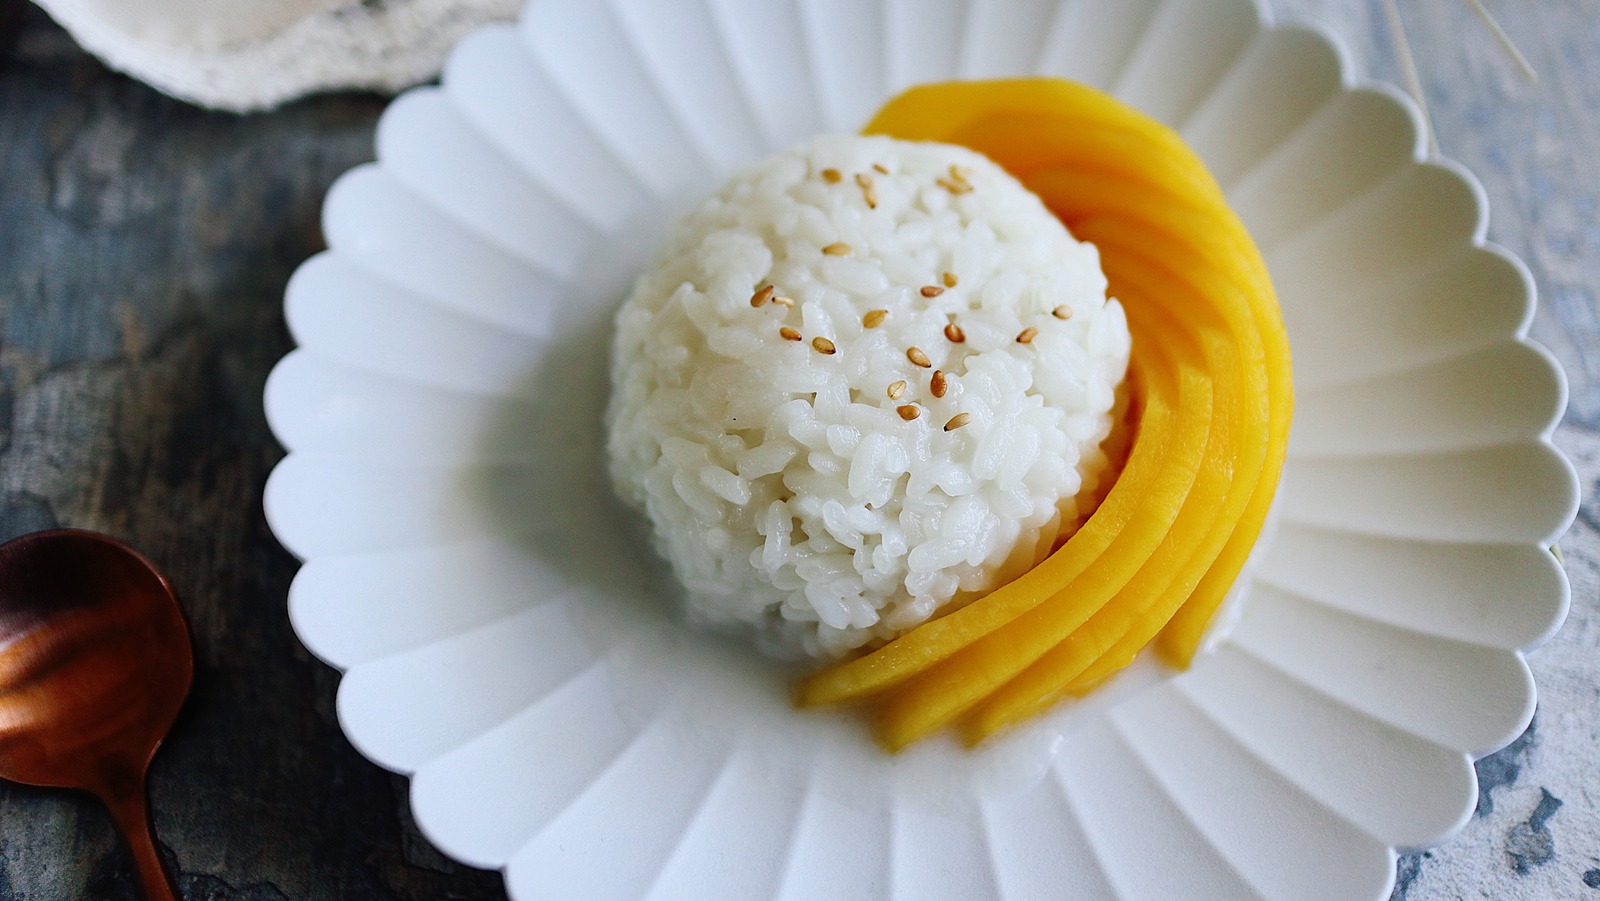 https://www.tastingtable.com/img/gallery/classic-thai-mango-sticky-rice-recipe/l-intro-1675266841.jpg